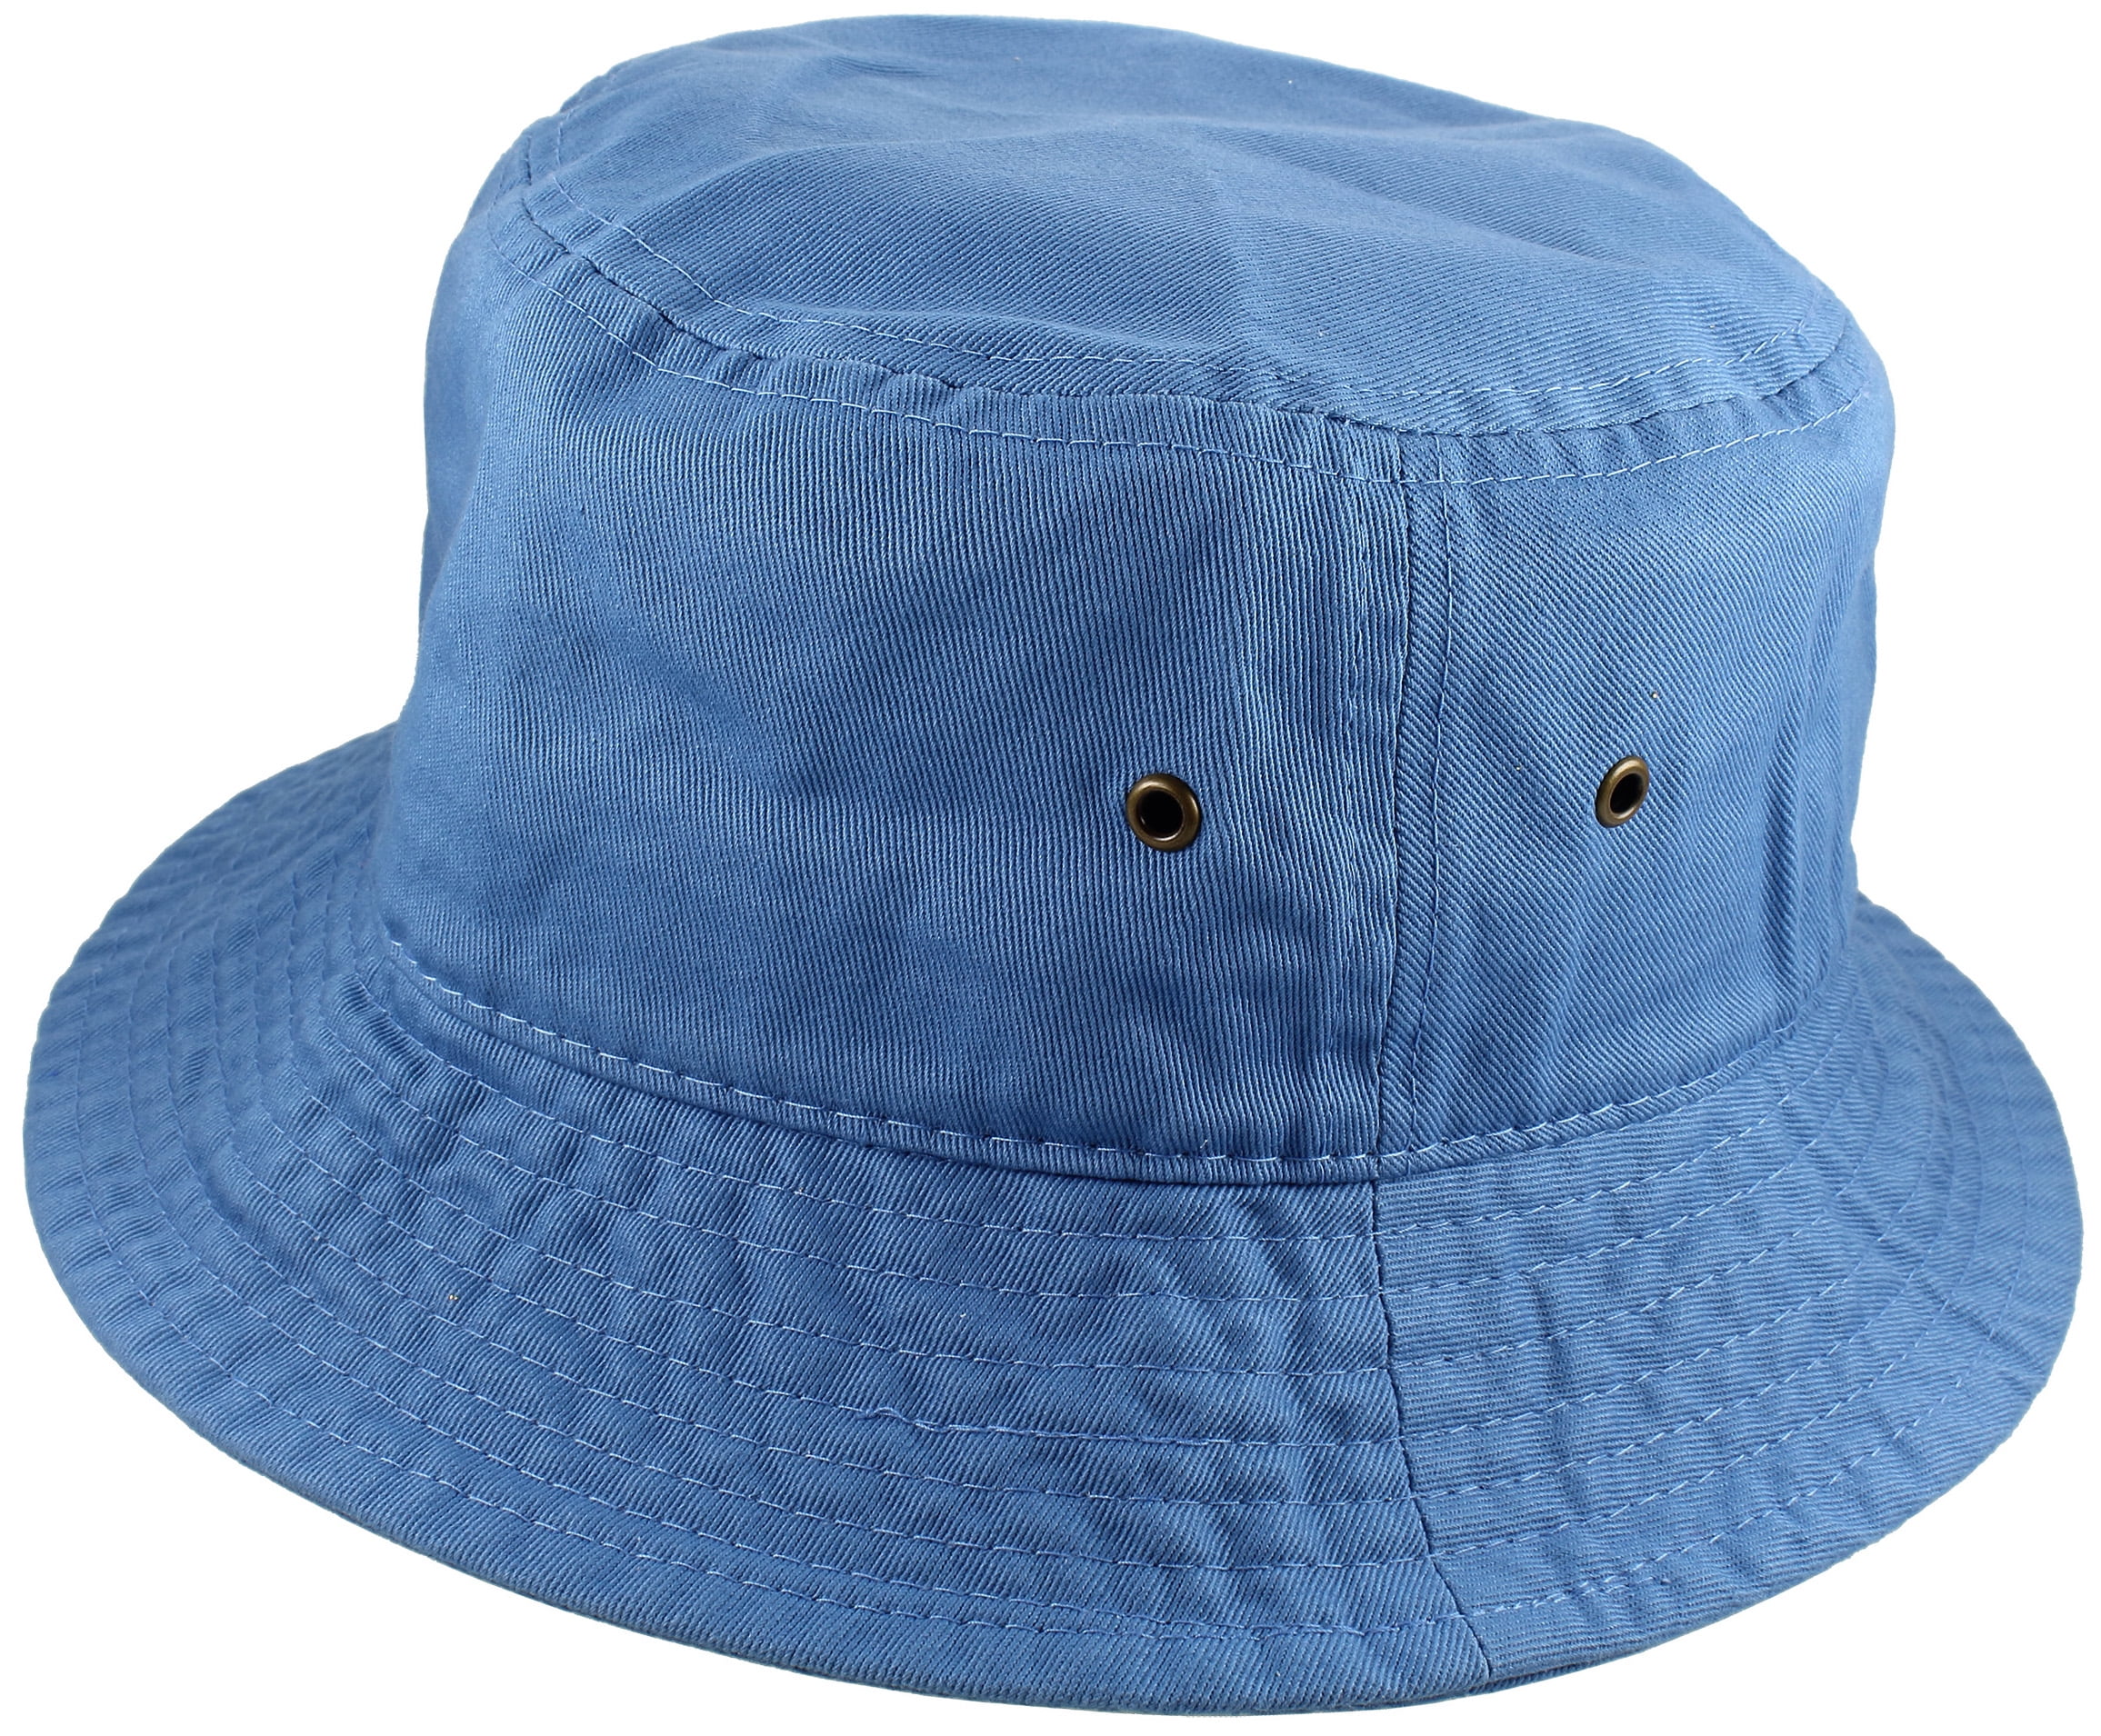 Gelante Bucket Hat 100 Cotton Packable Summer Travel Cap Sky Blue Lxl